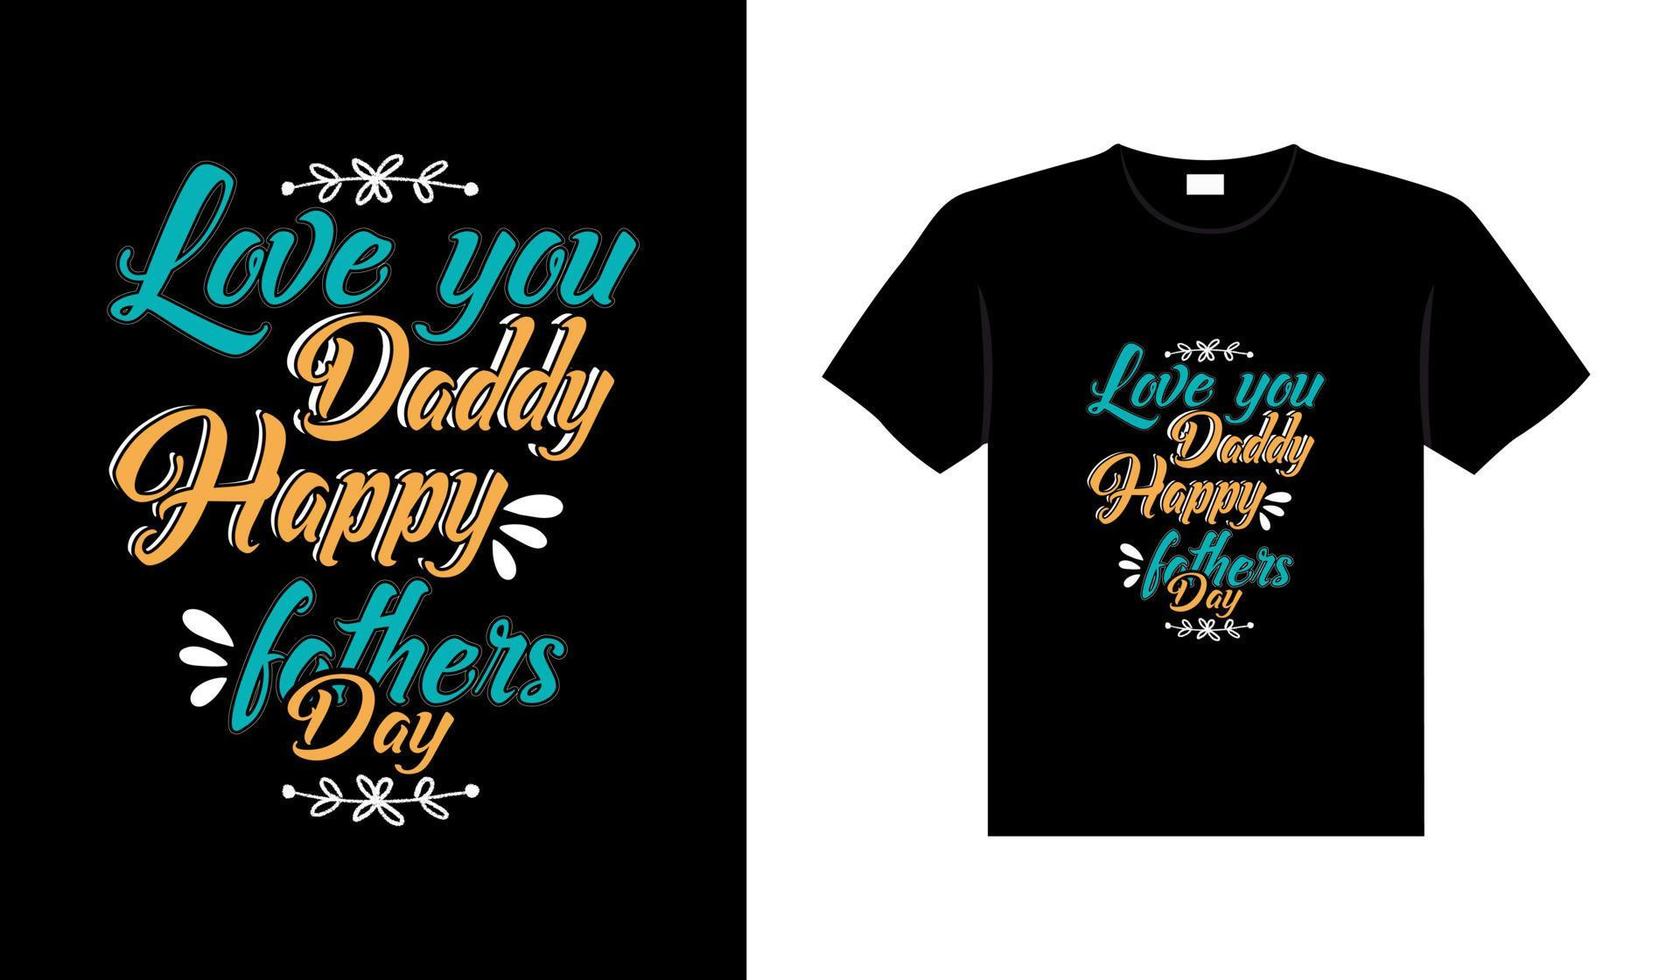 Dad family tshirt design lettering typography quote relationship merchandise design vector